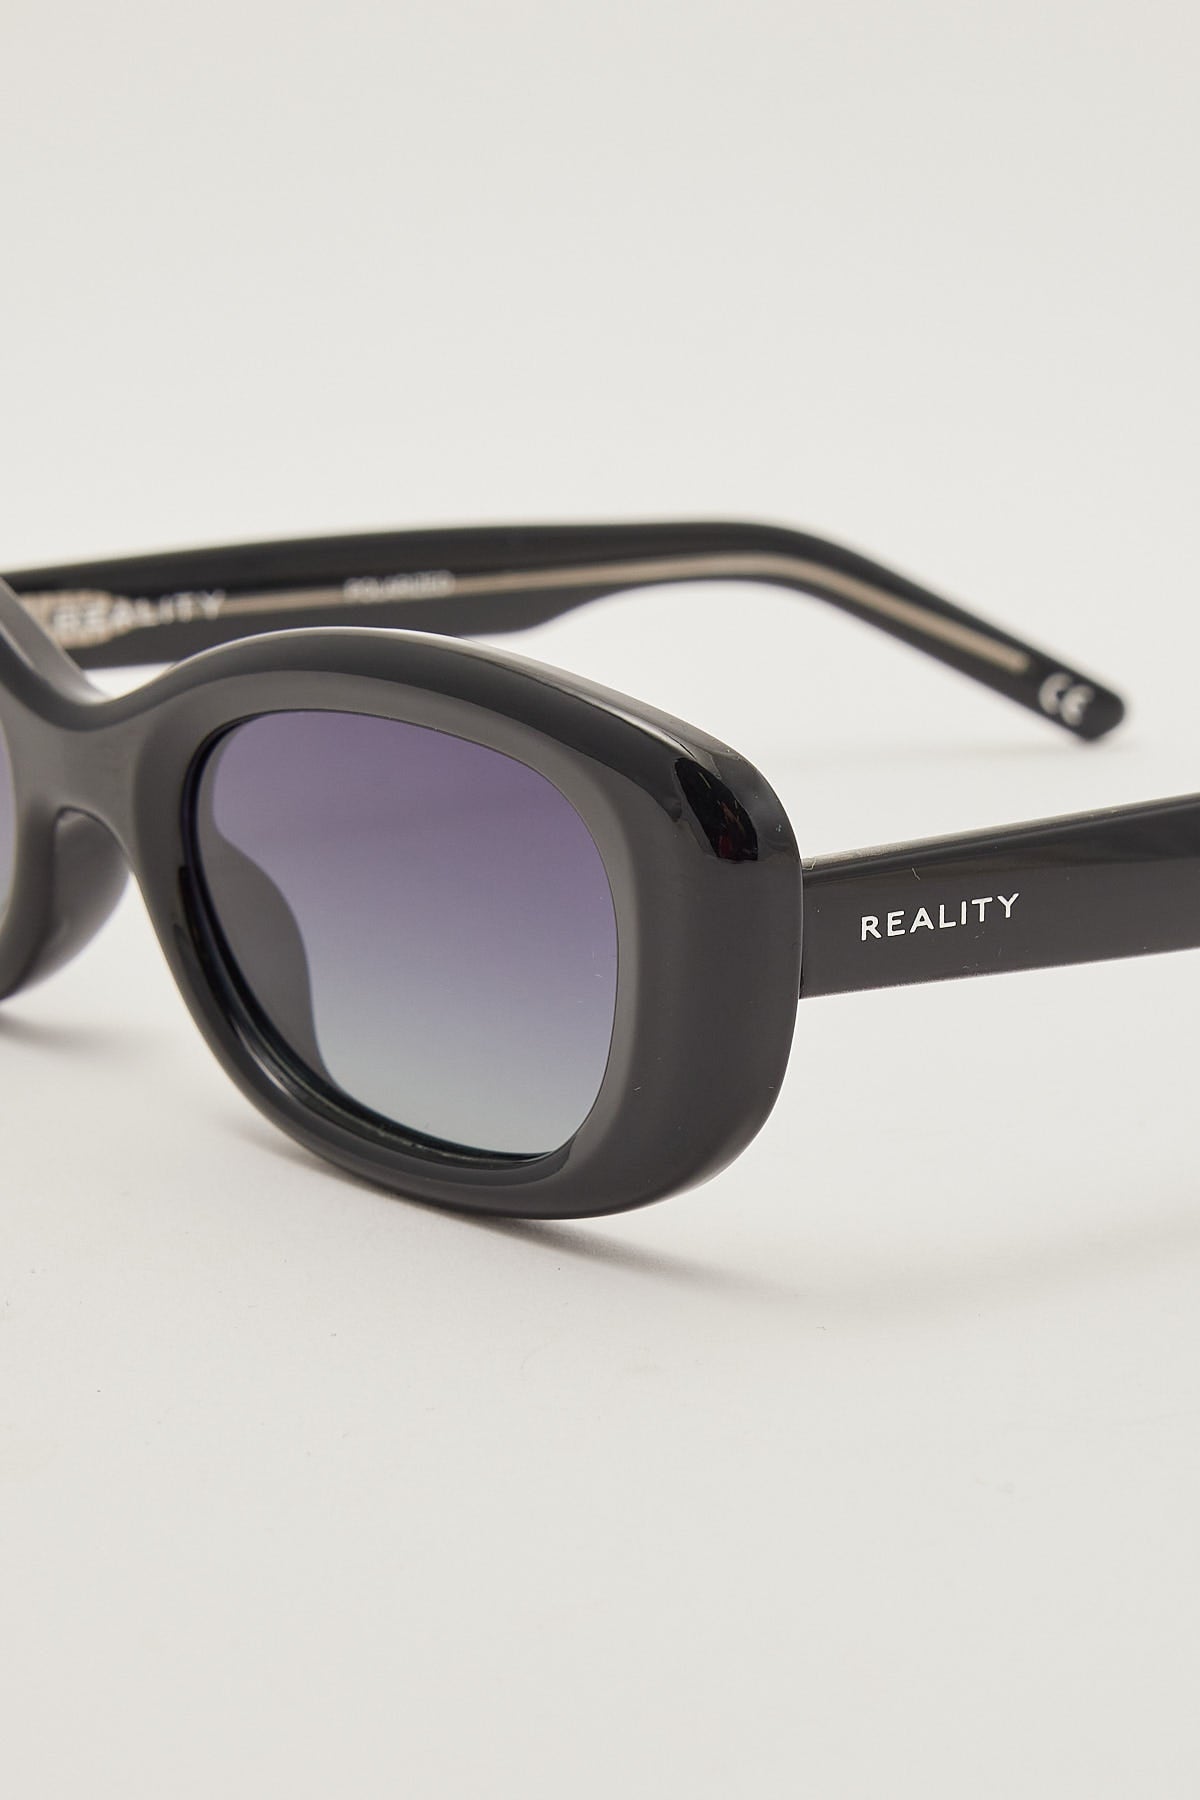 Reality Eyewear Modern Venus Black